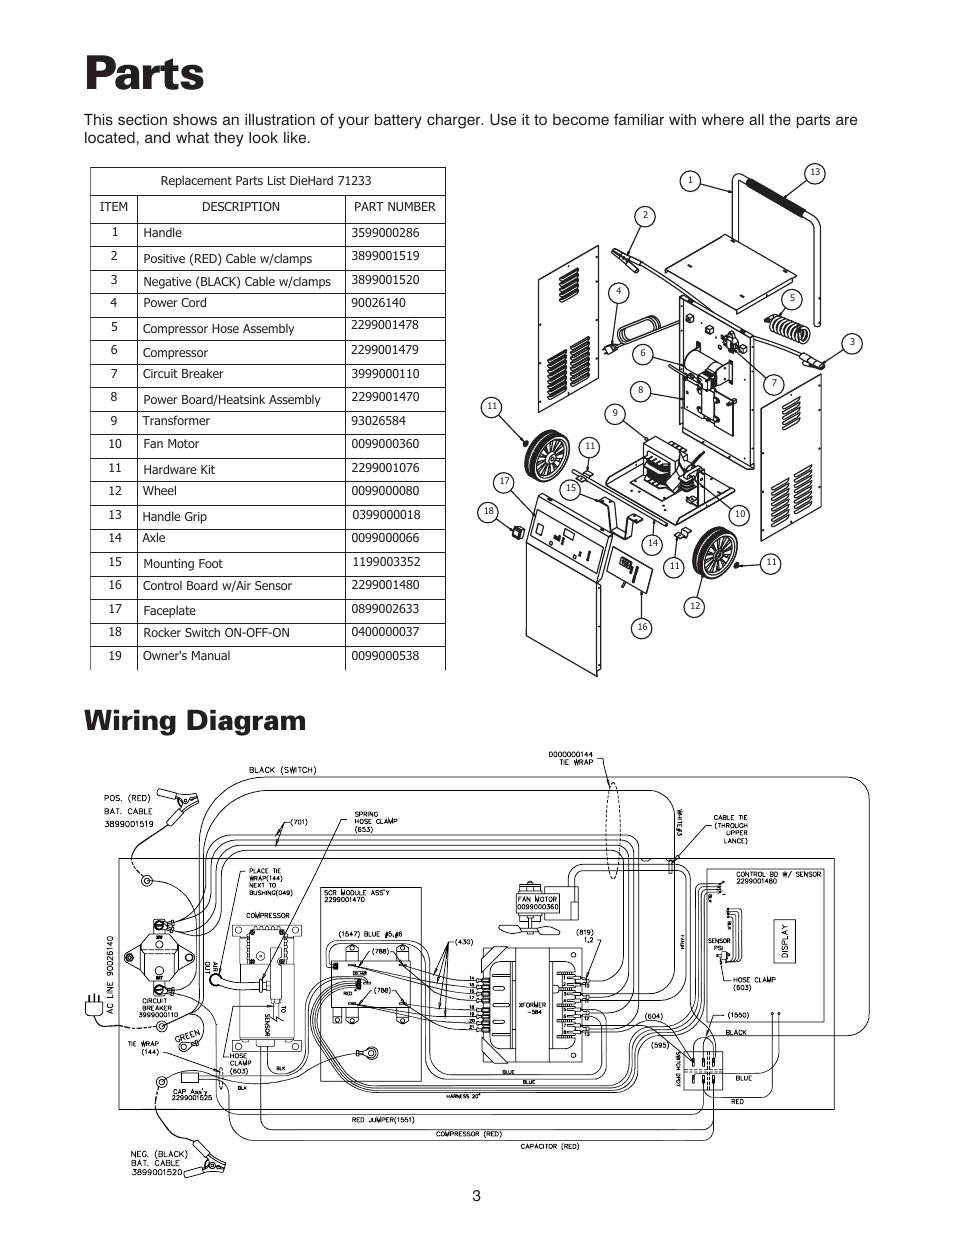 Parts  Wiring Diagram